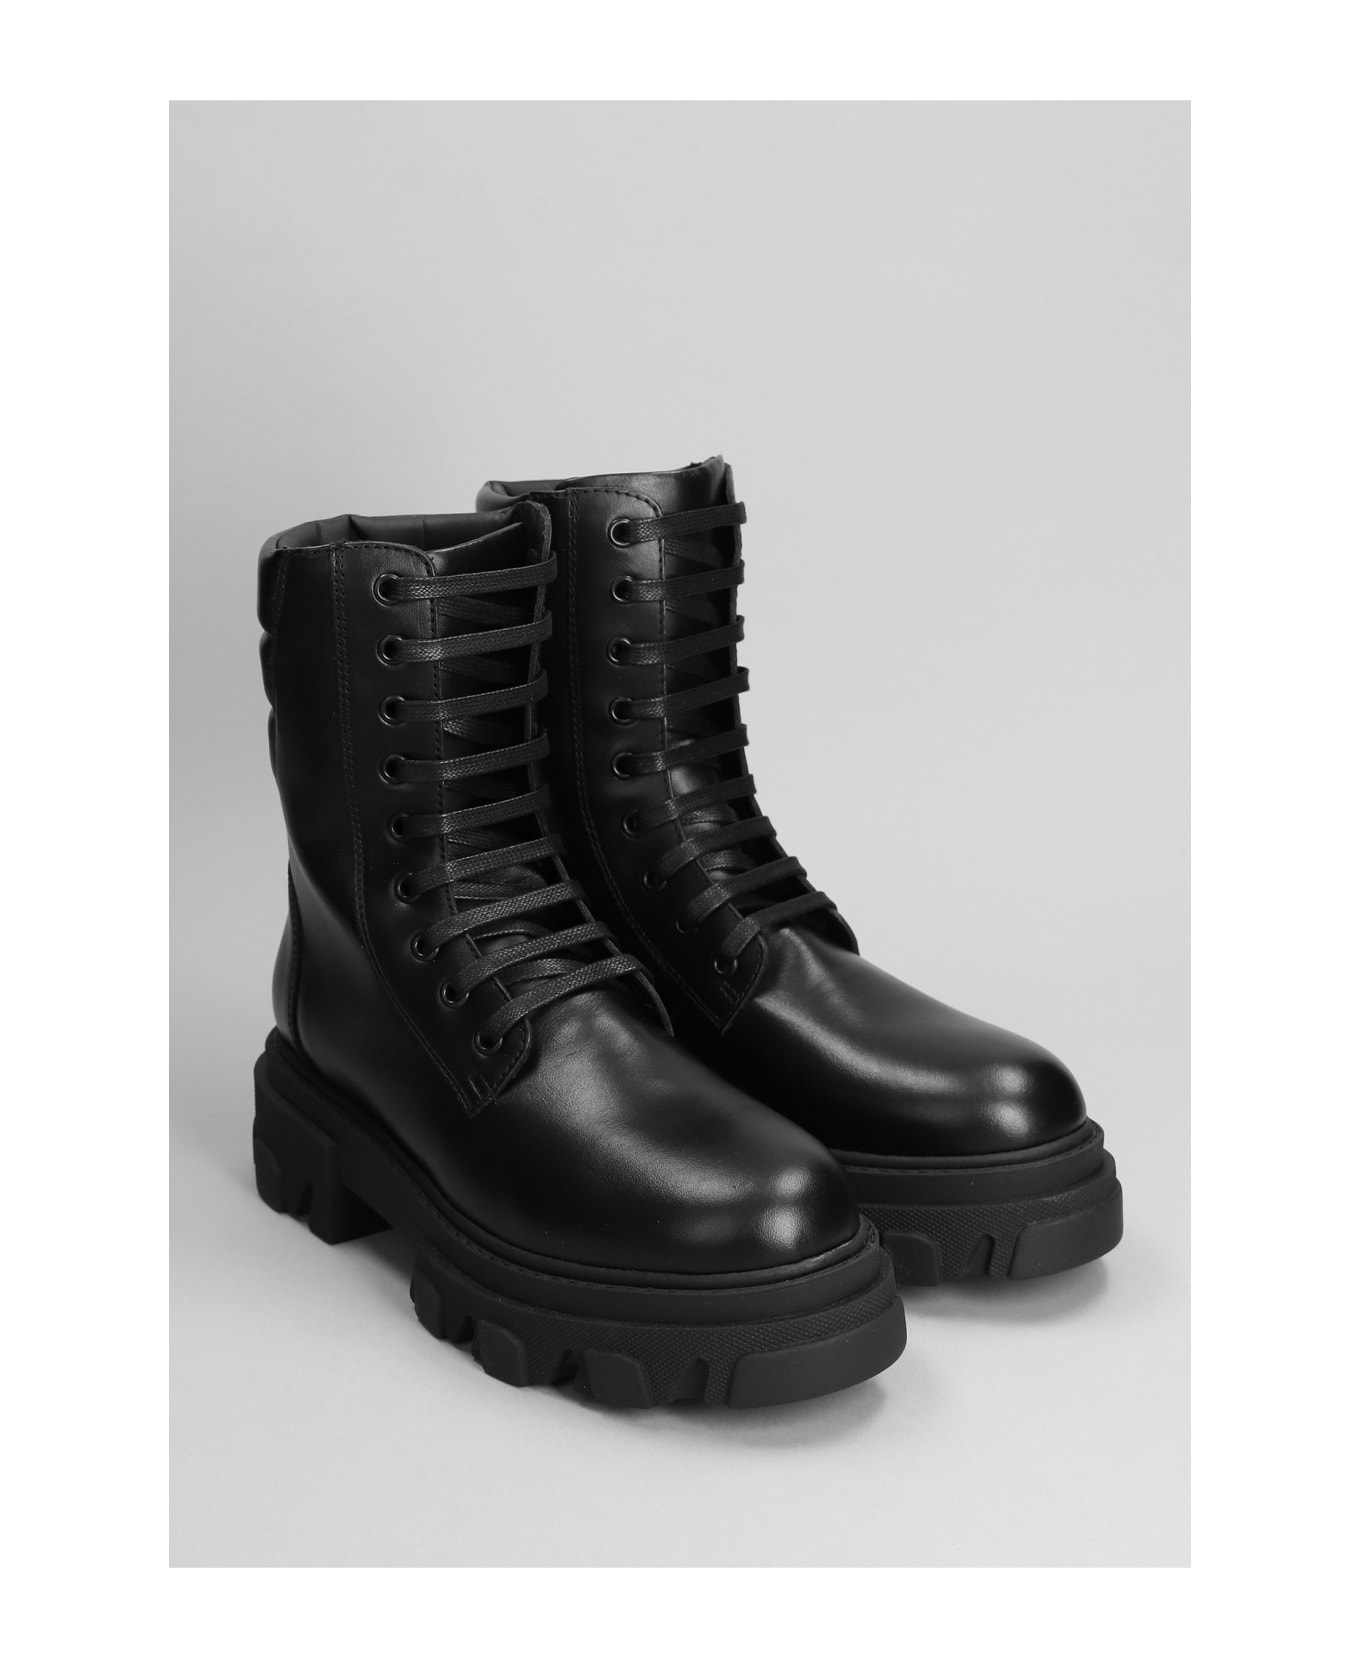 GIA BORGHINI Gia 35 Combat Boots In Black Leather - black